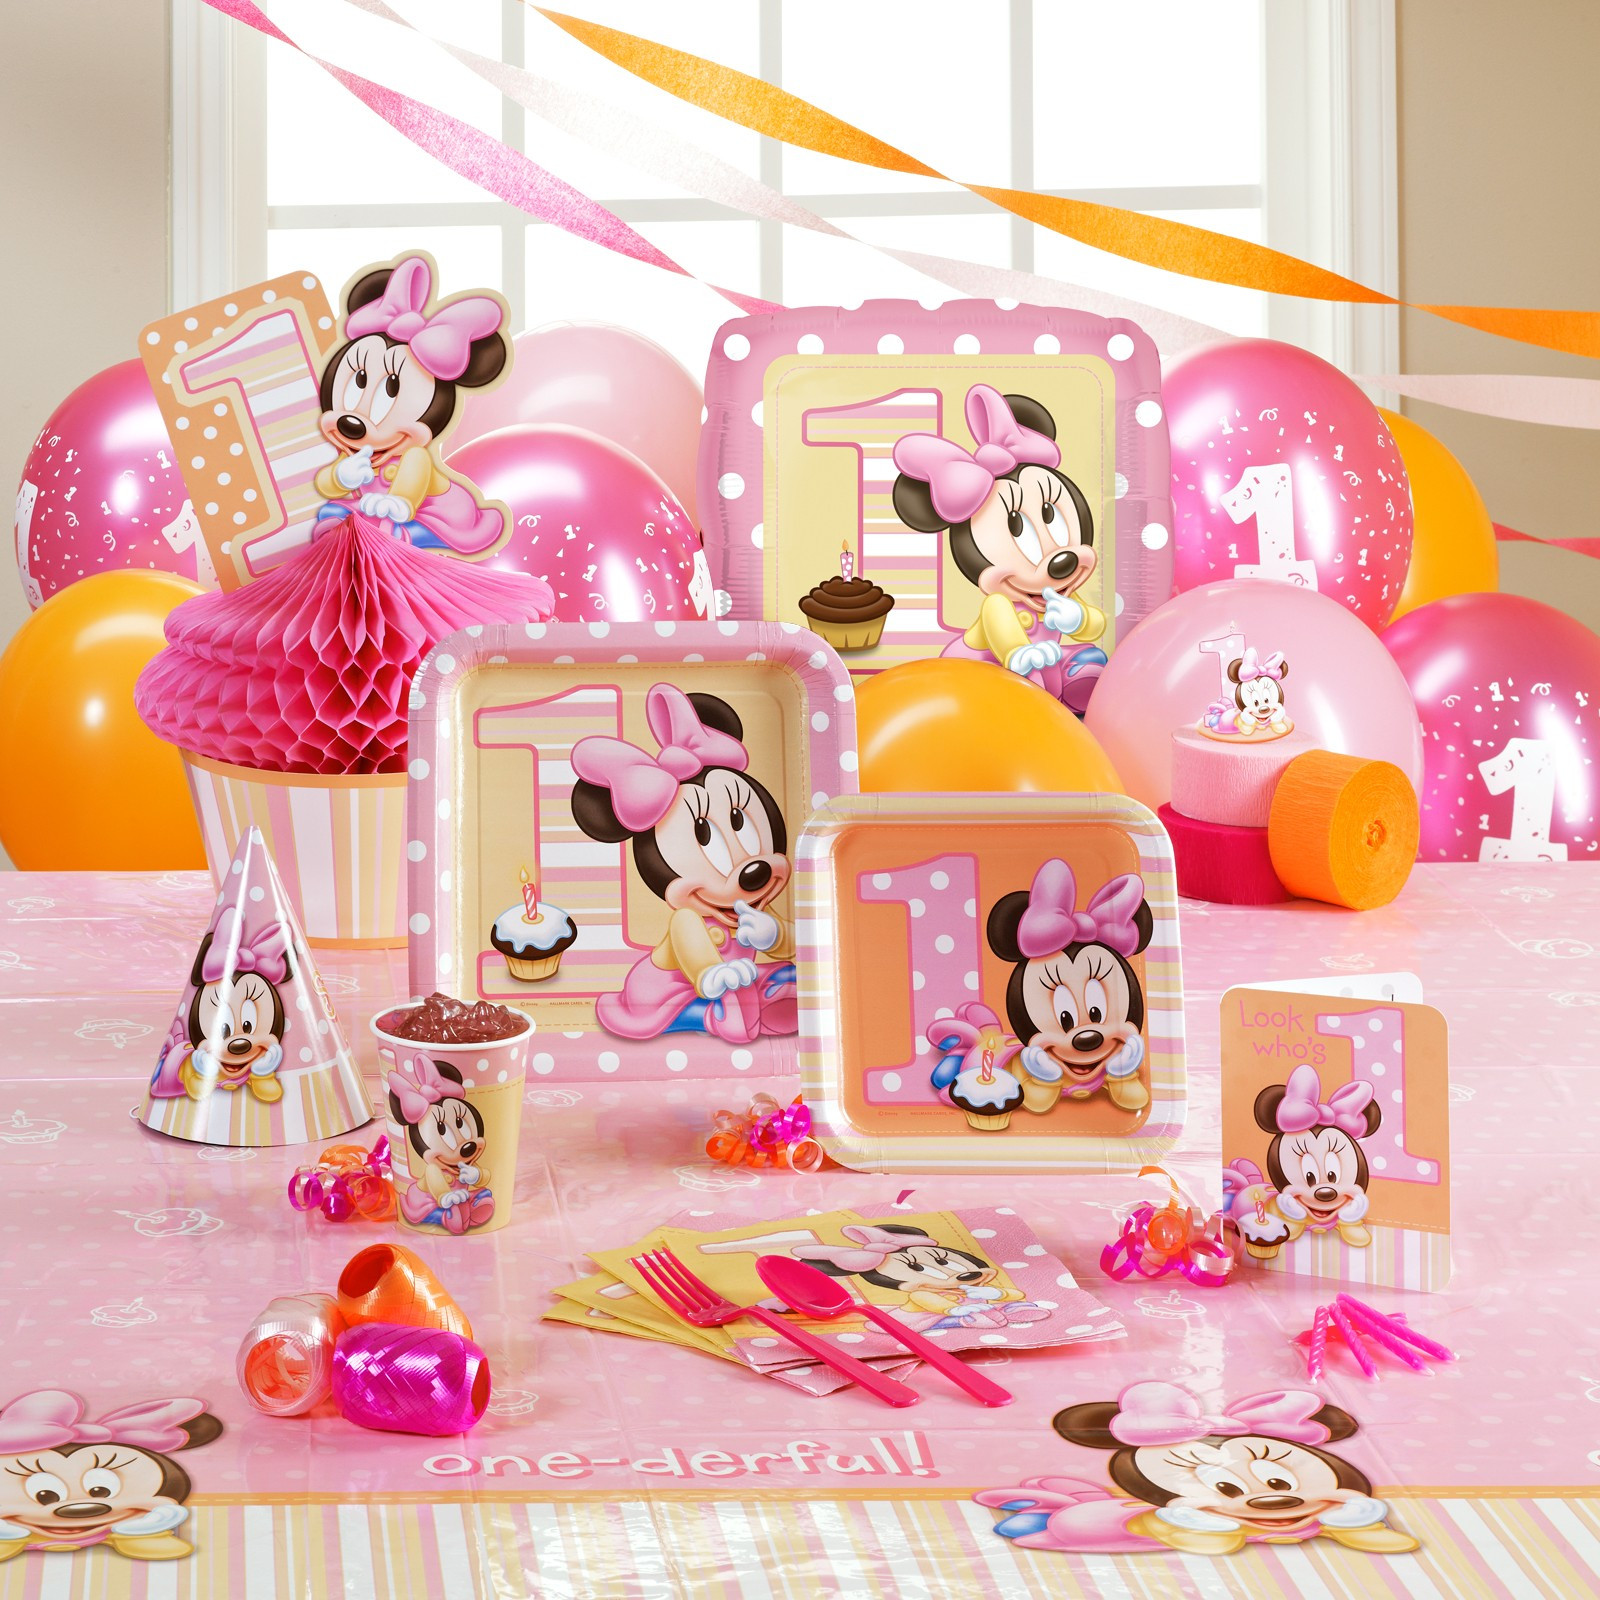 Minnie Mouse 1St Birthday Party Ideas
 Minnie Mouse 1st Birthday Party